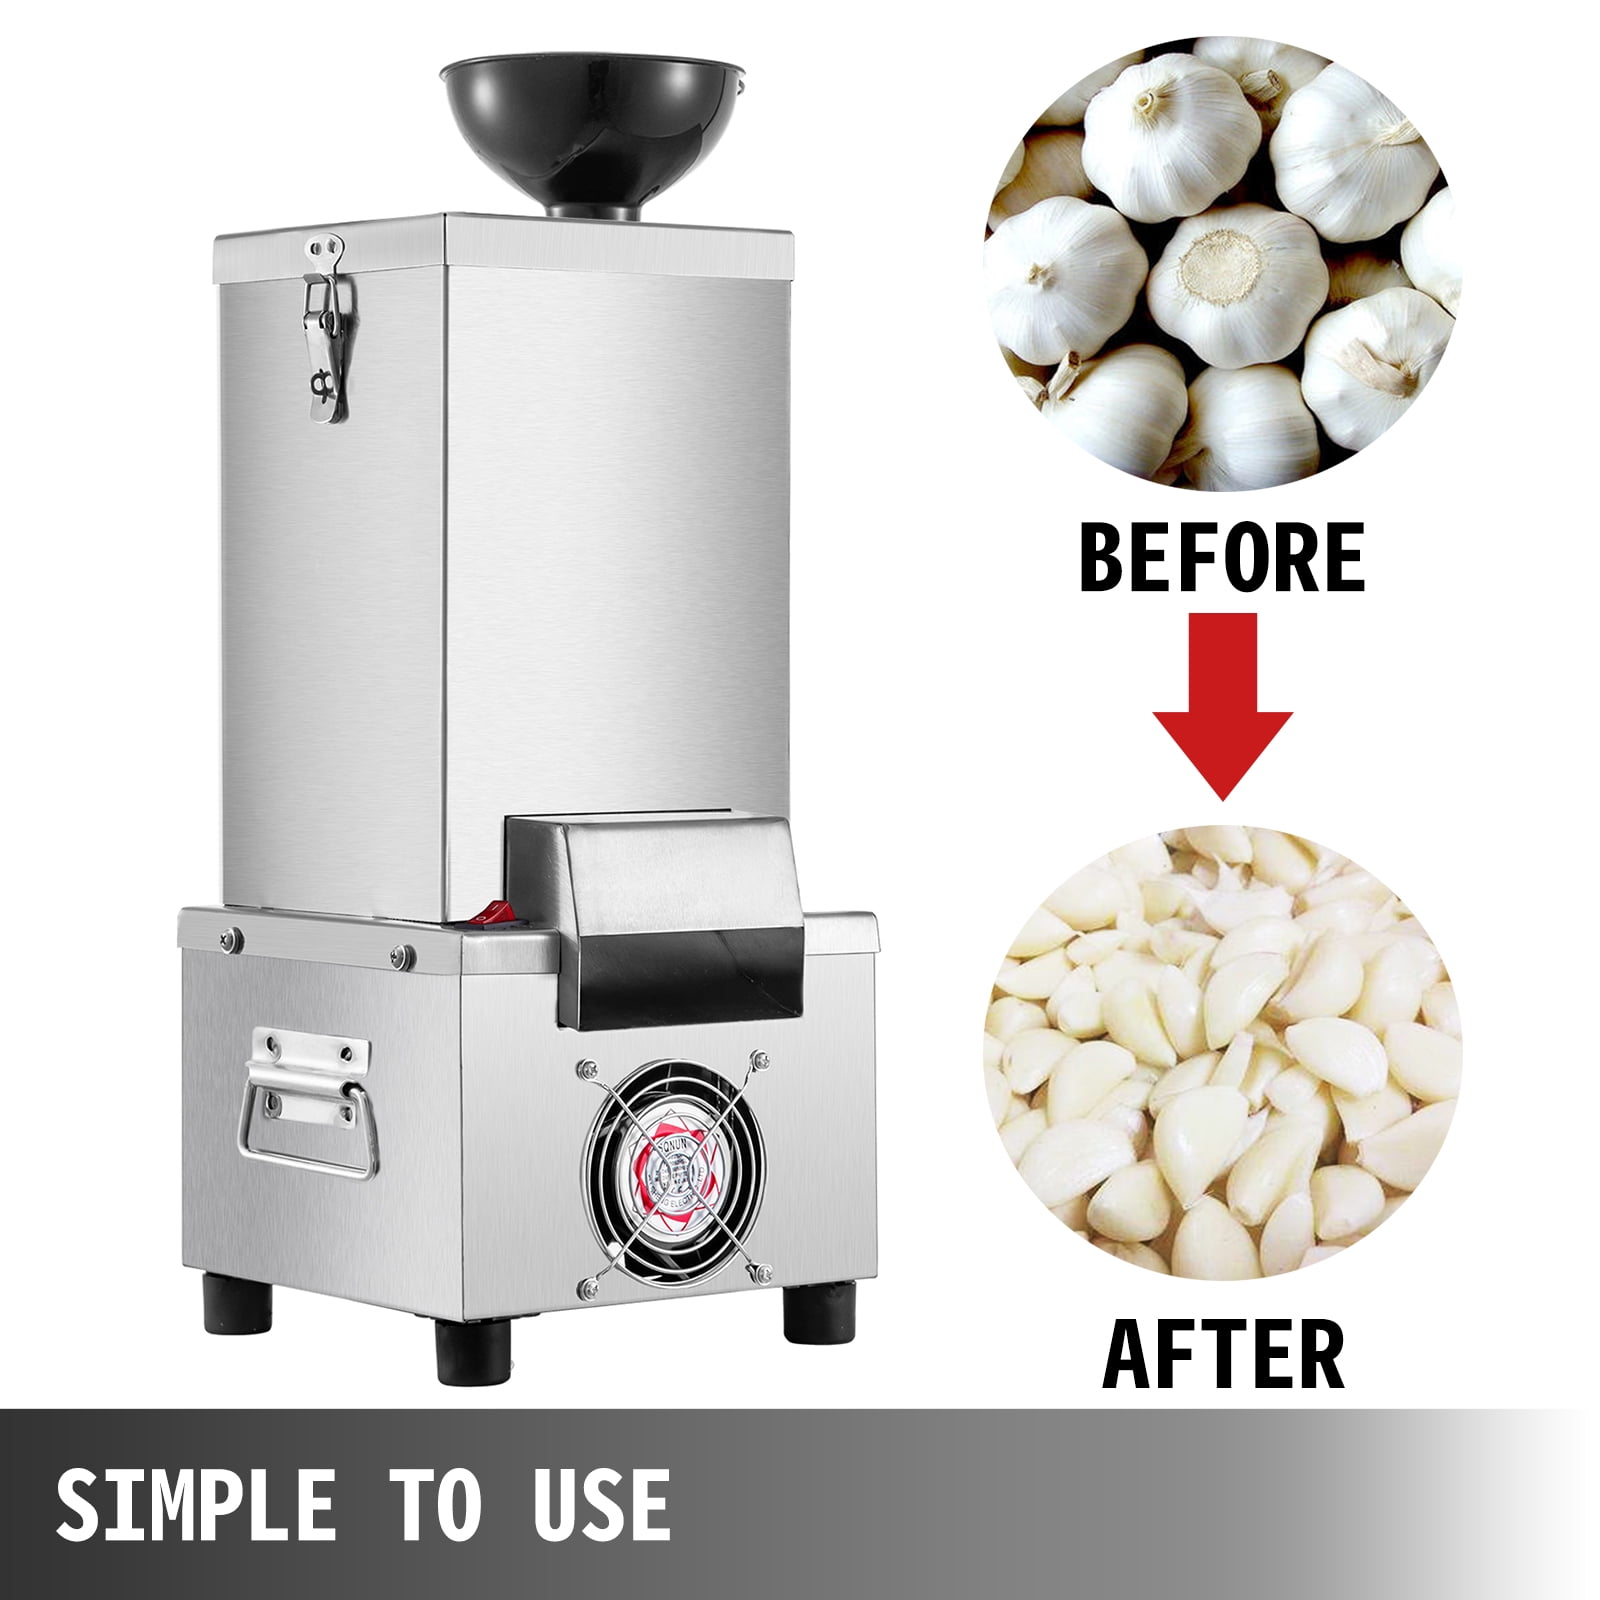 Hanniy 200W Commercial Electric Garlic Peeler, 30KG/H Garlic Peeling Machine Garlic Separator, Kitchen Innovations Garlic Peel, Silver